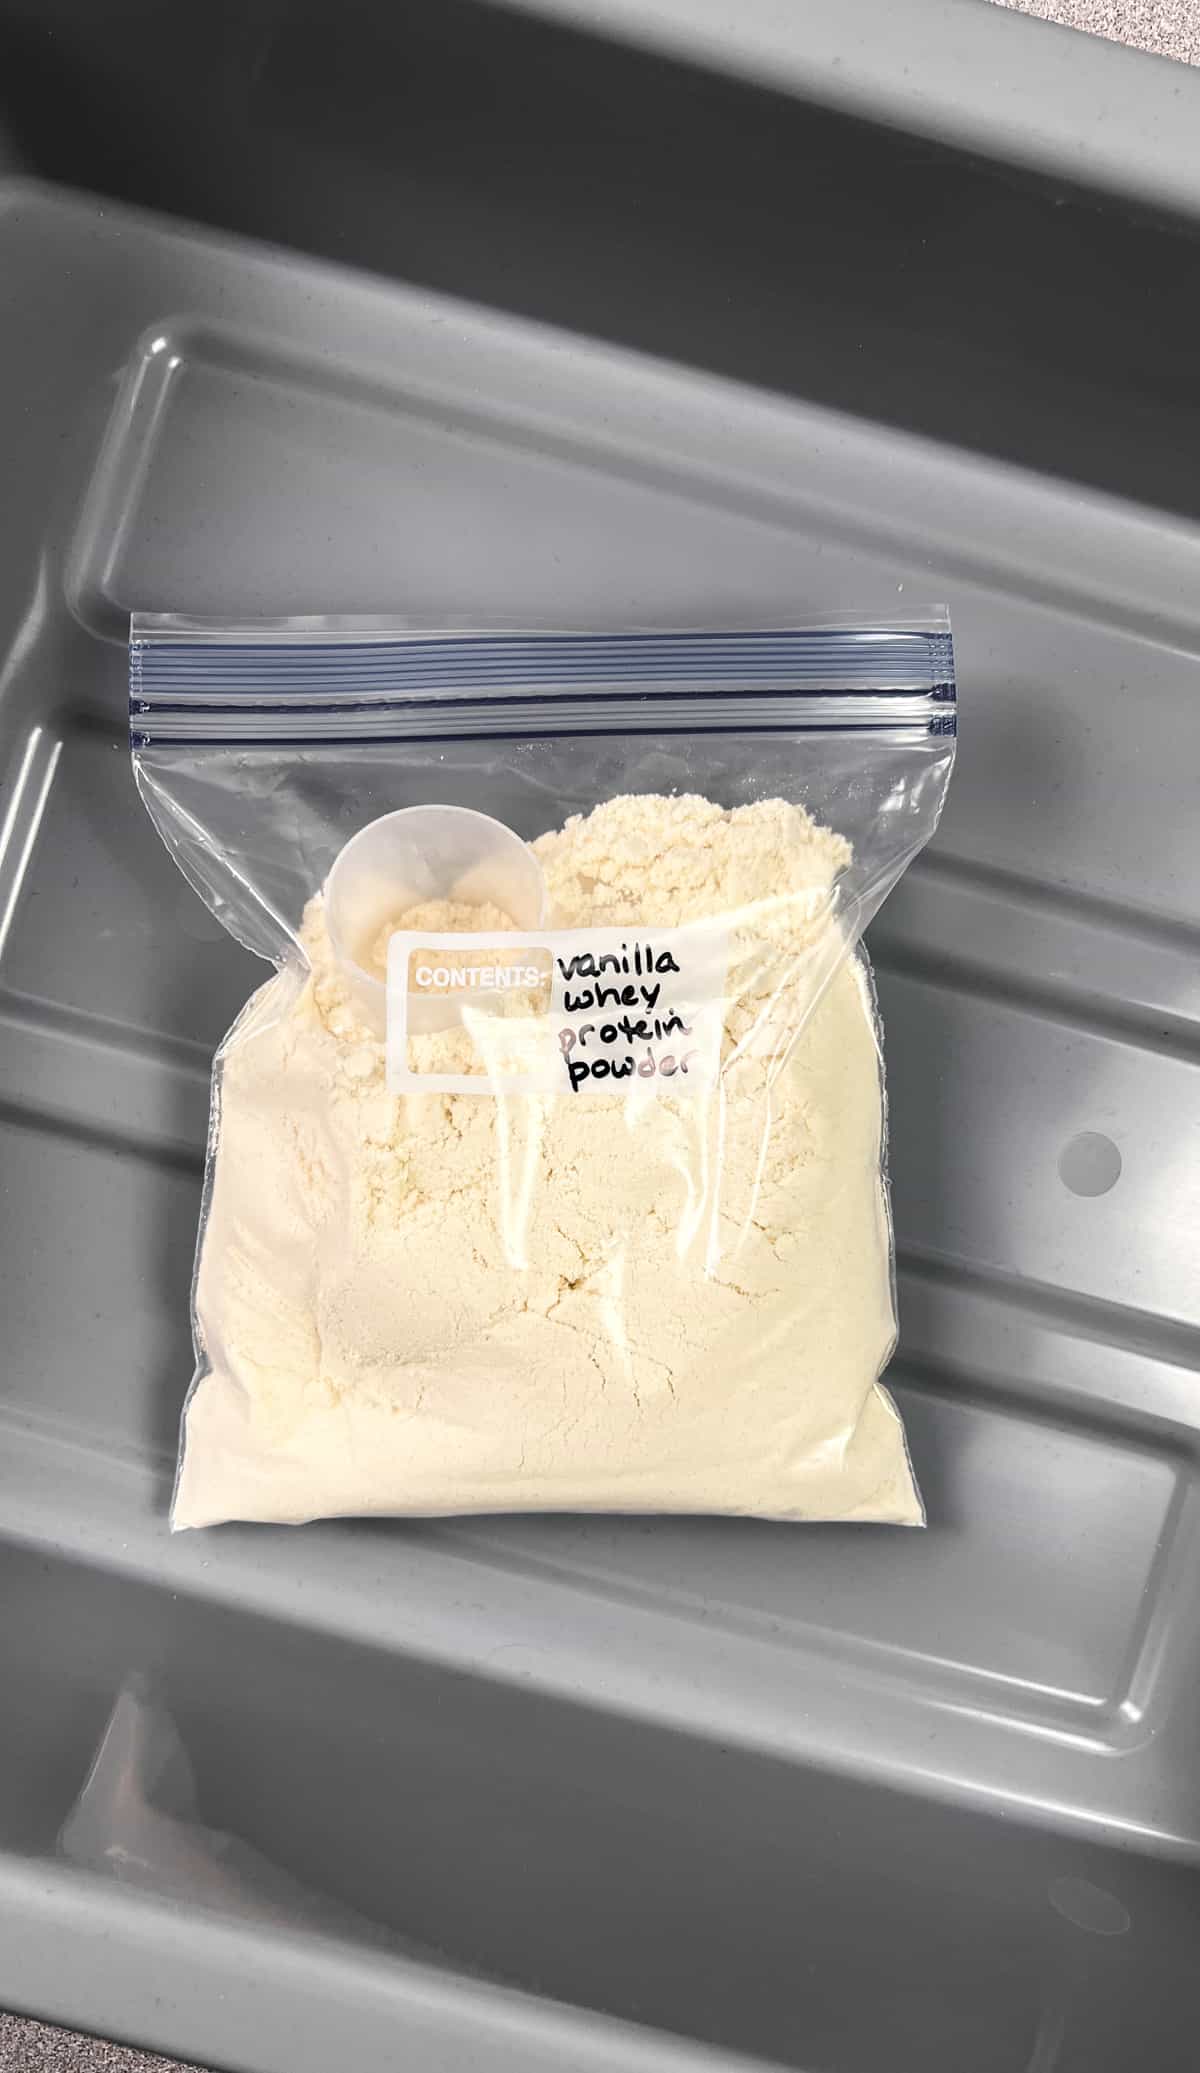 ziploc bag of vanilla protein powder in a grey TSA bin for airport security.